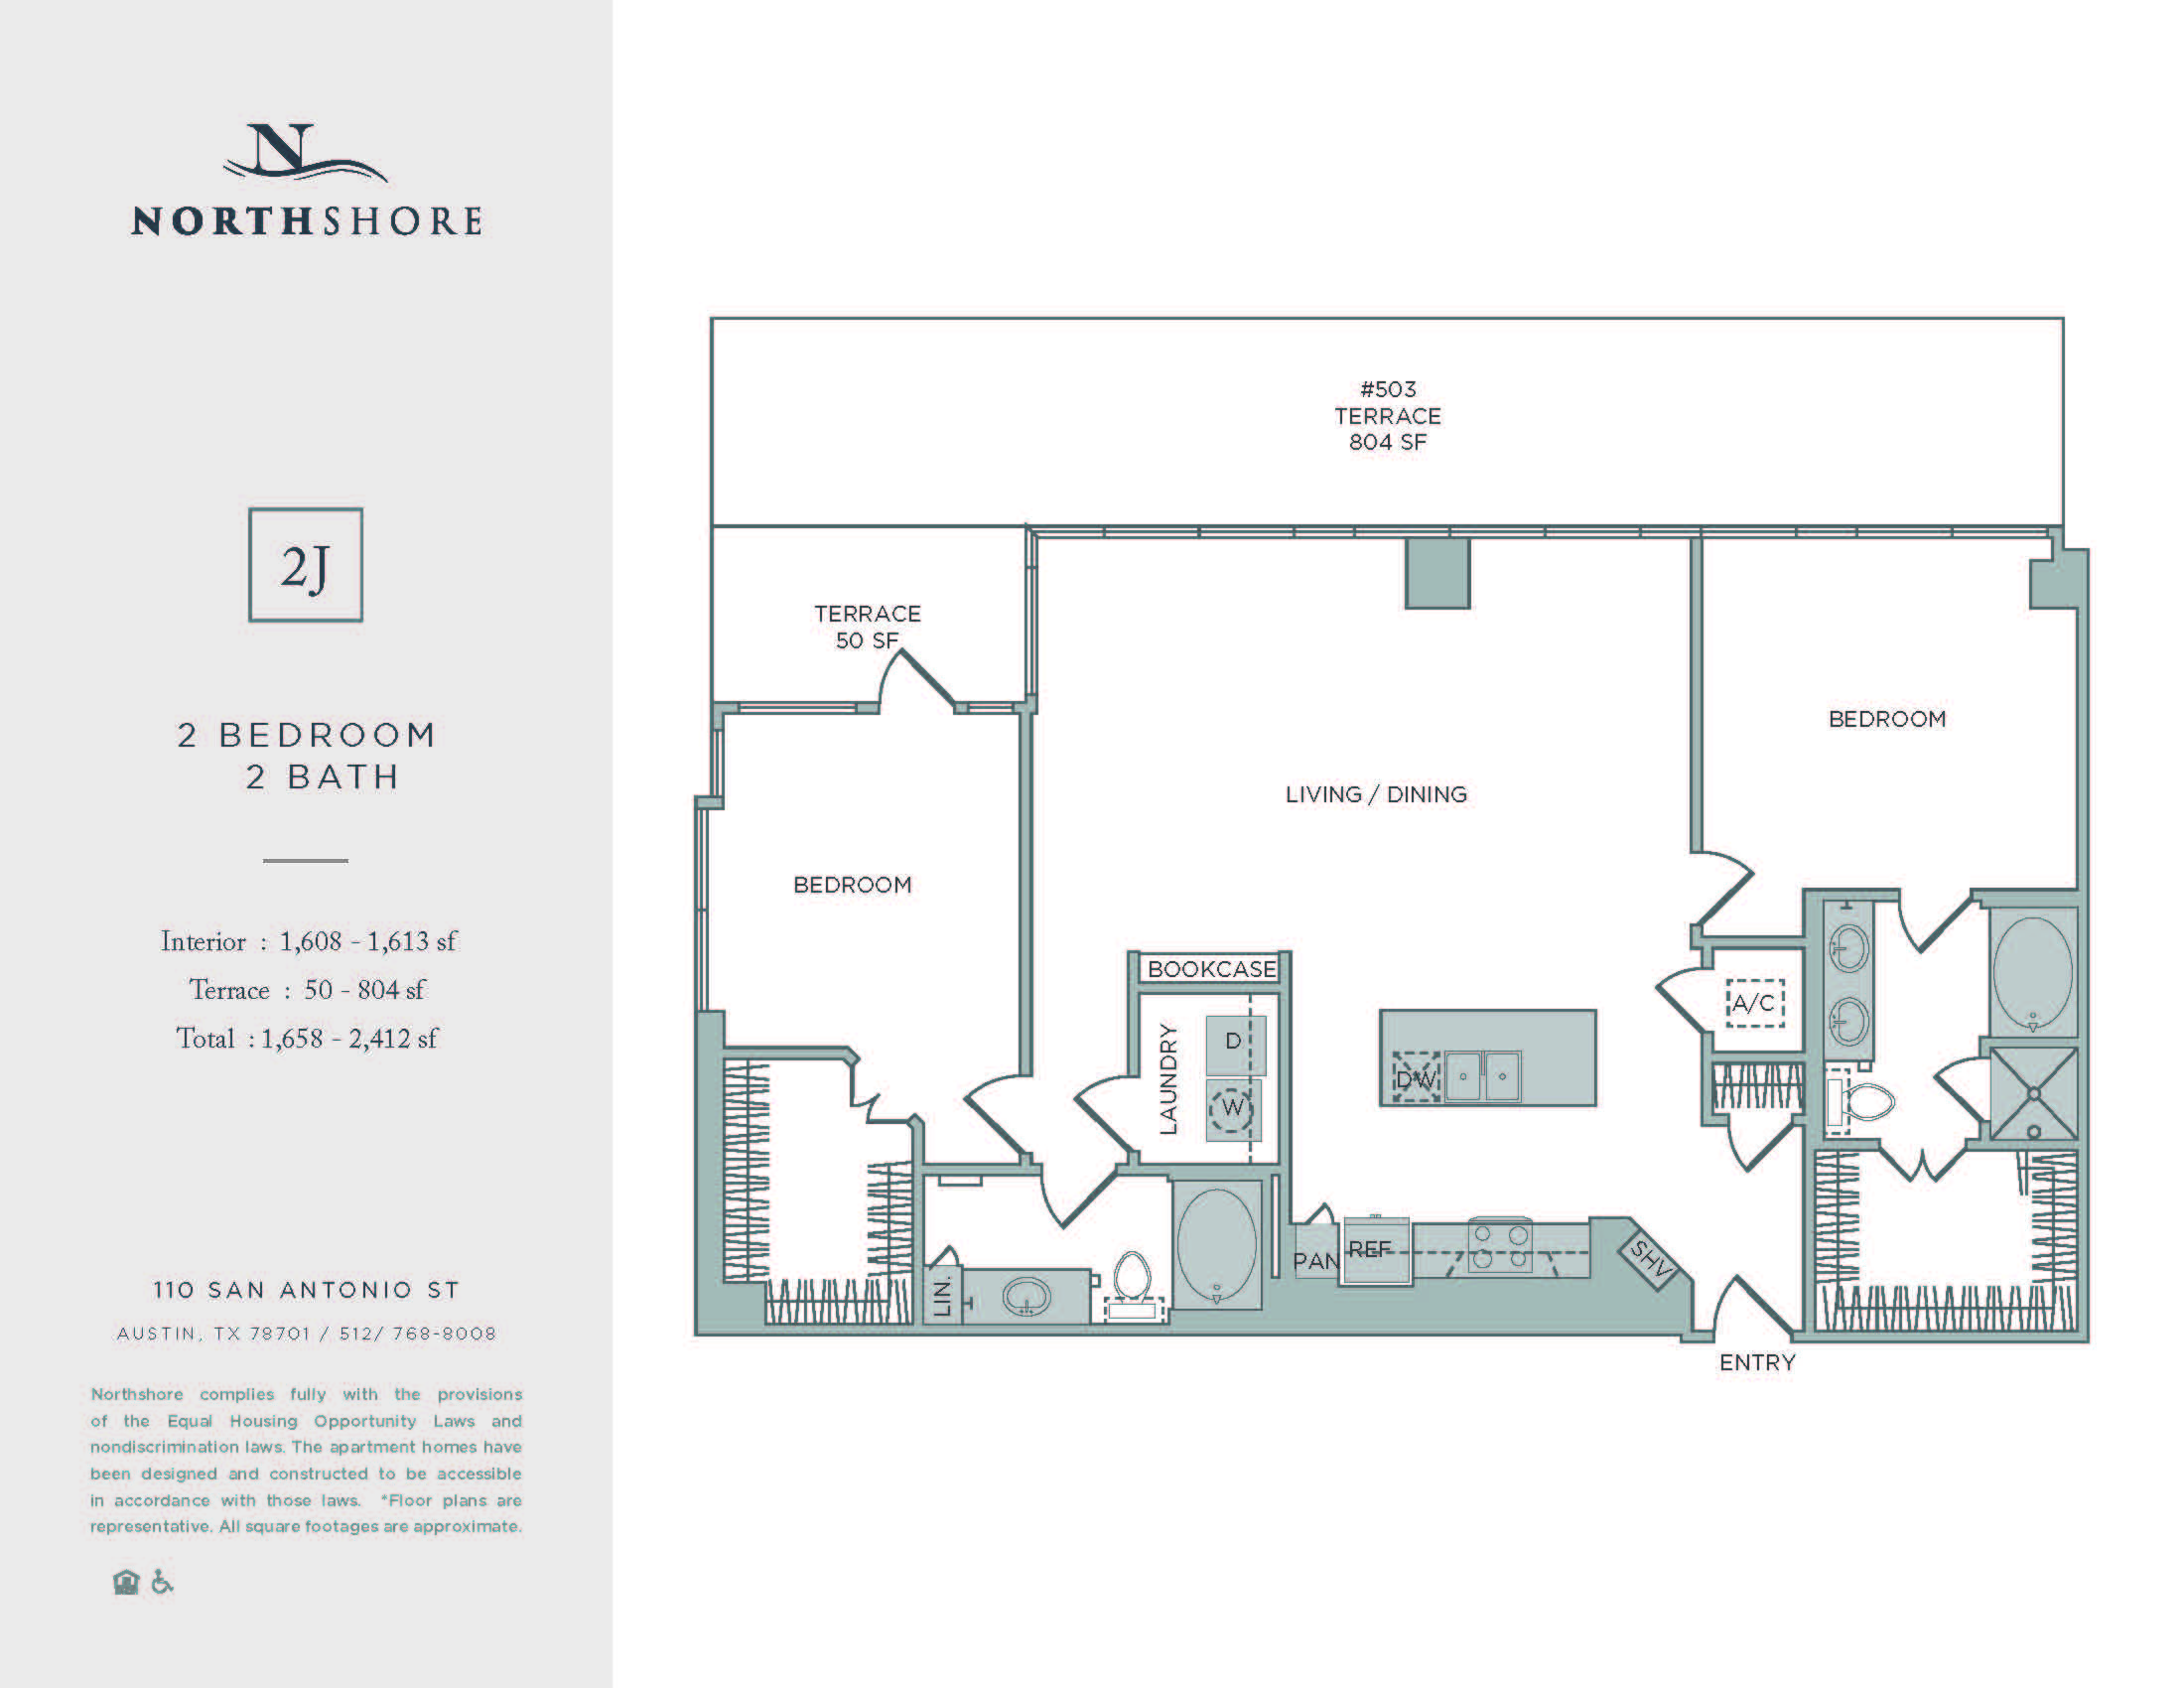 Studio, 1, 2, 3-Bedroom Apartments in Austin, TX | Northshore Austin